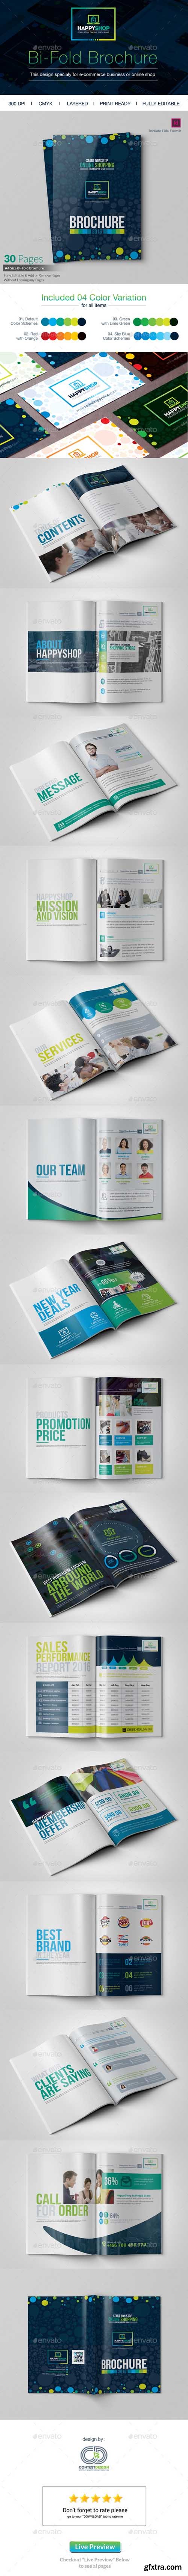 GR - E-Commerce Promotional Bi-Fold Brochure 14464632